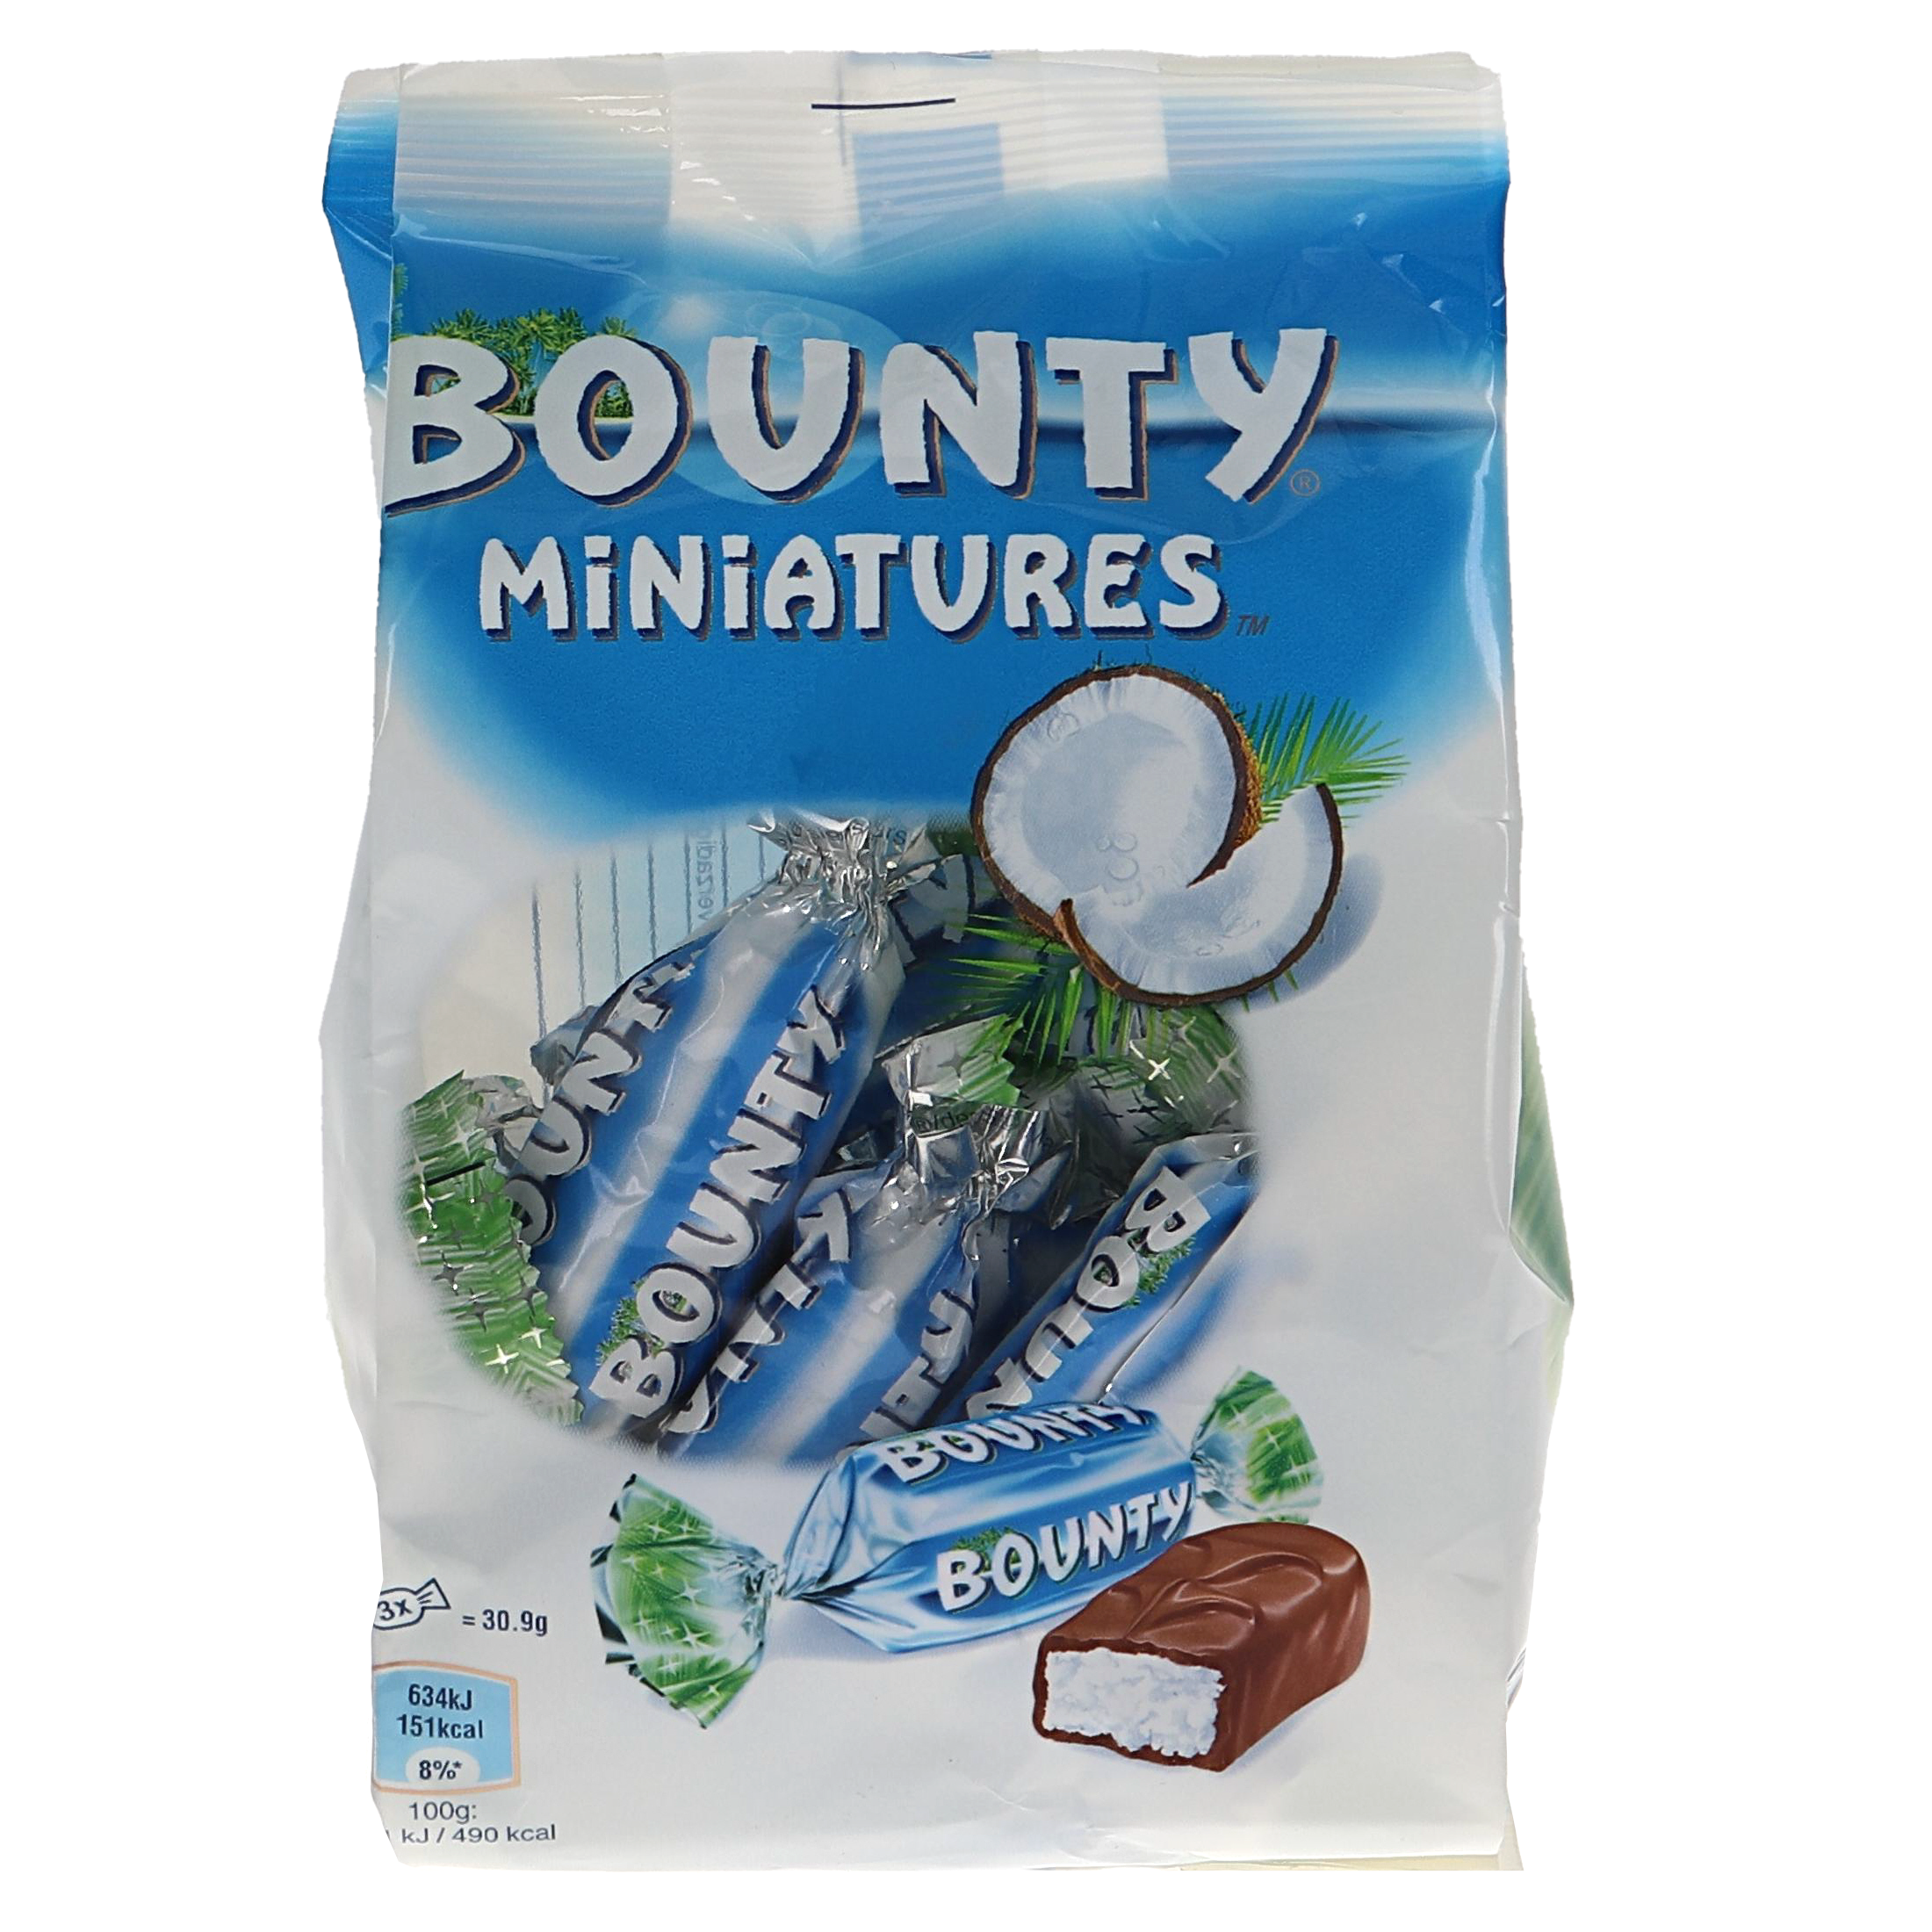 Bounty Minis - 24% rabat